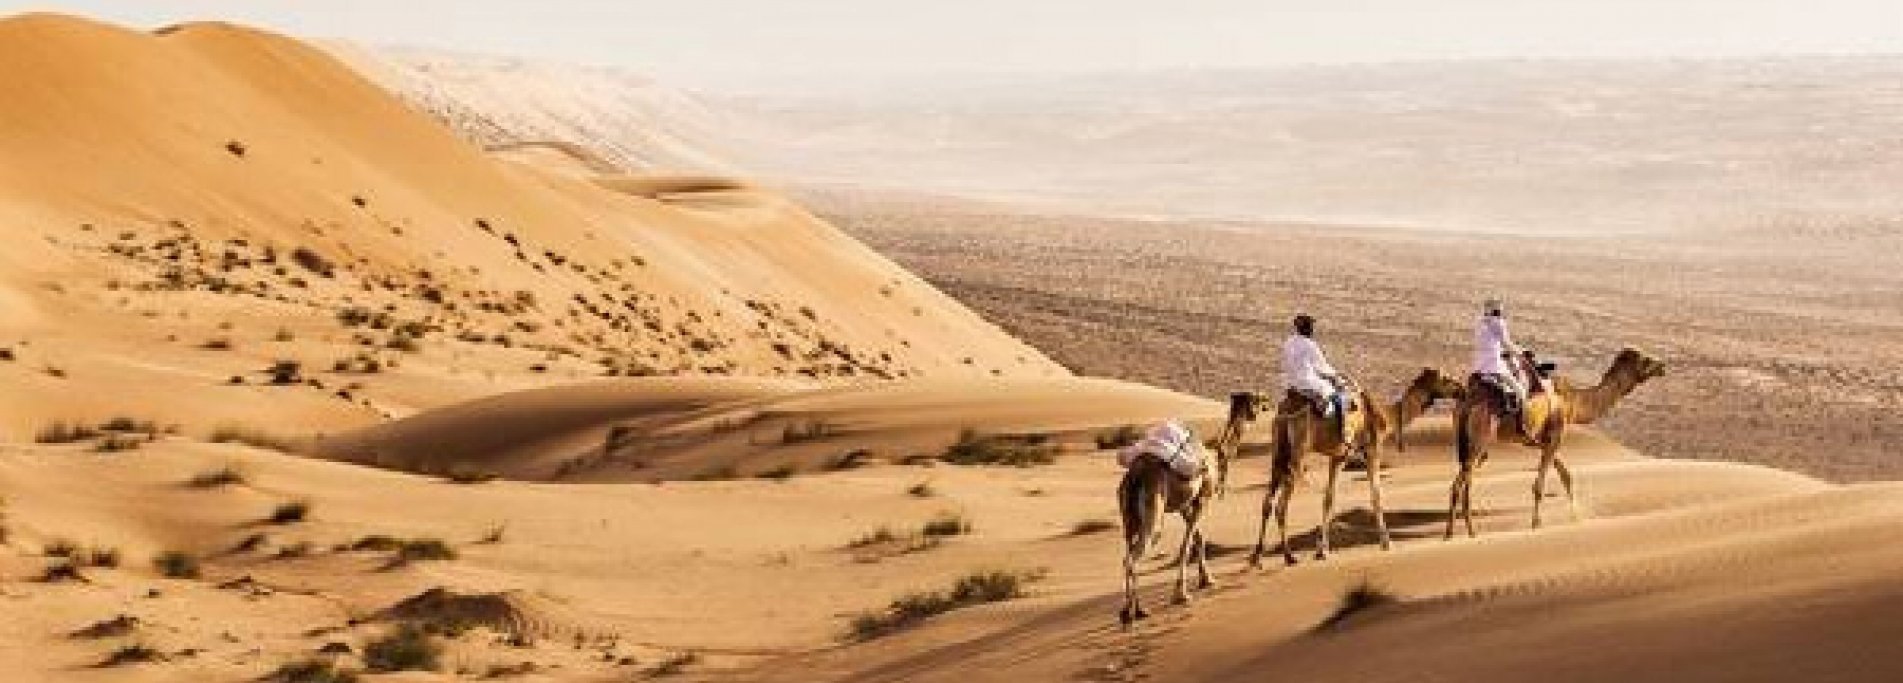 Adventure trip to Oman - Self-driving tour